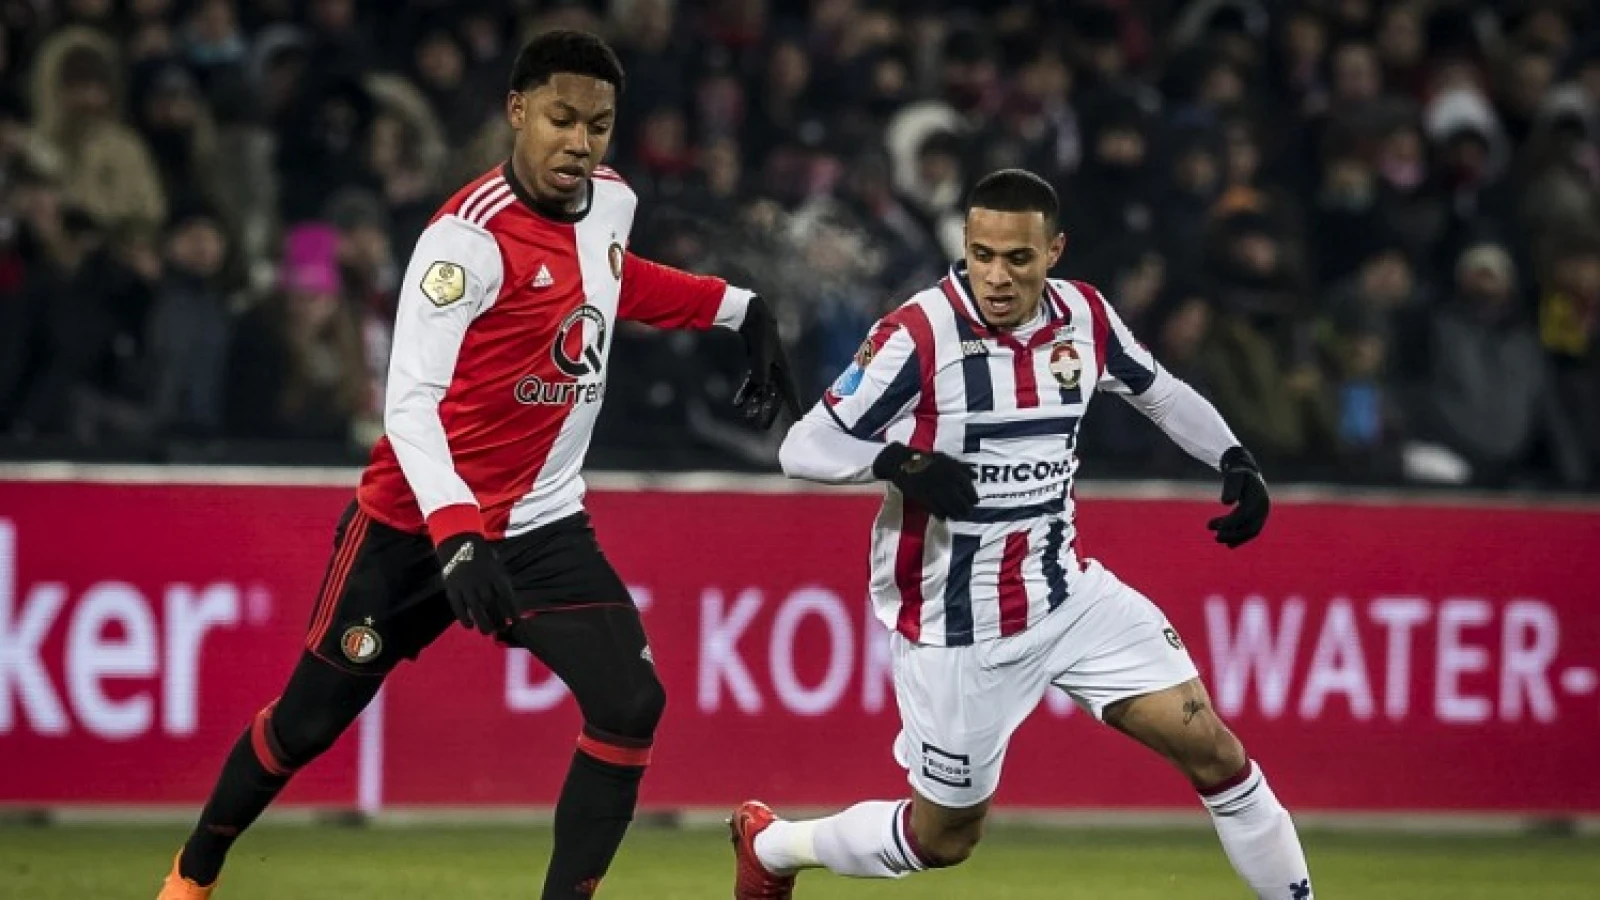 LIVE | Feyenoord - Willem II 3-0 | Einde wedstrijd